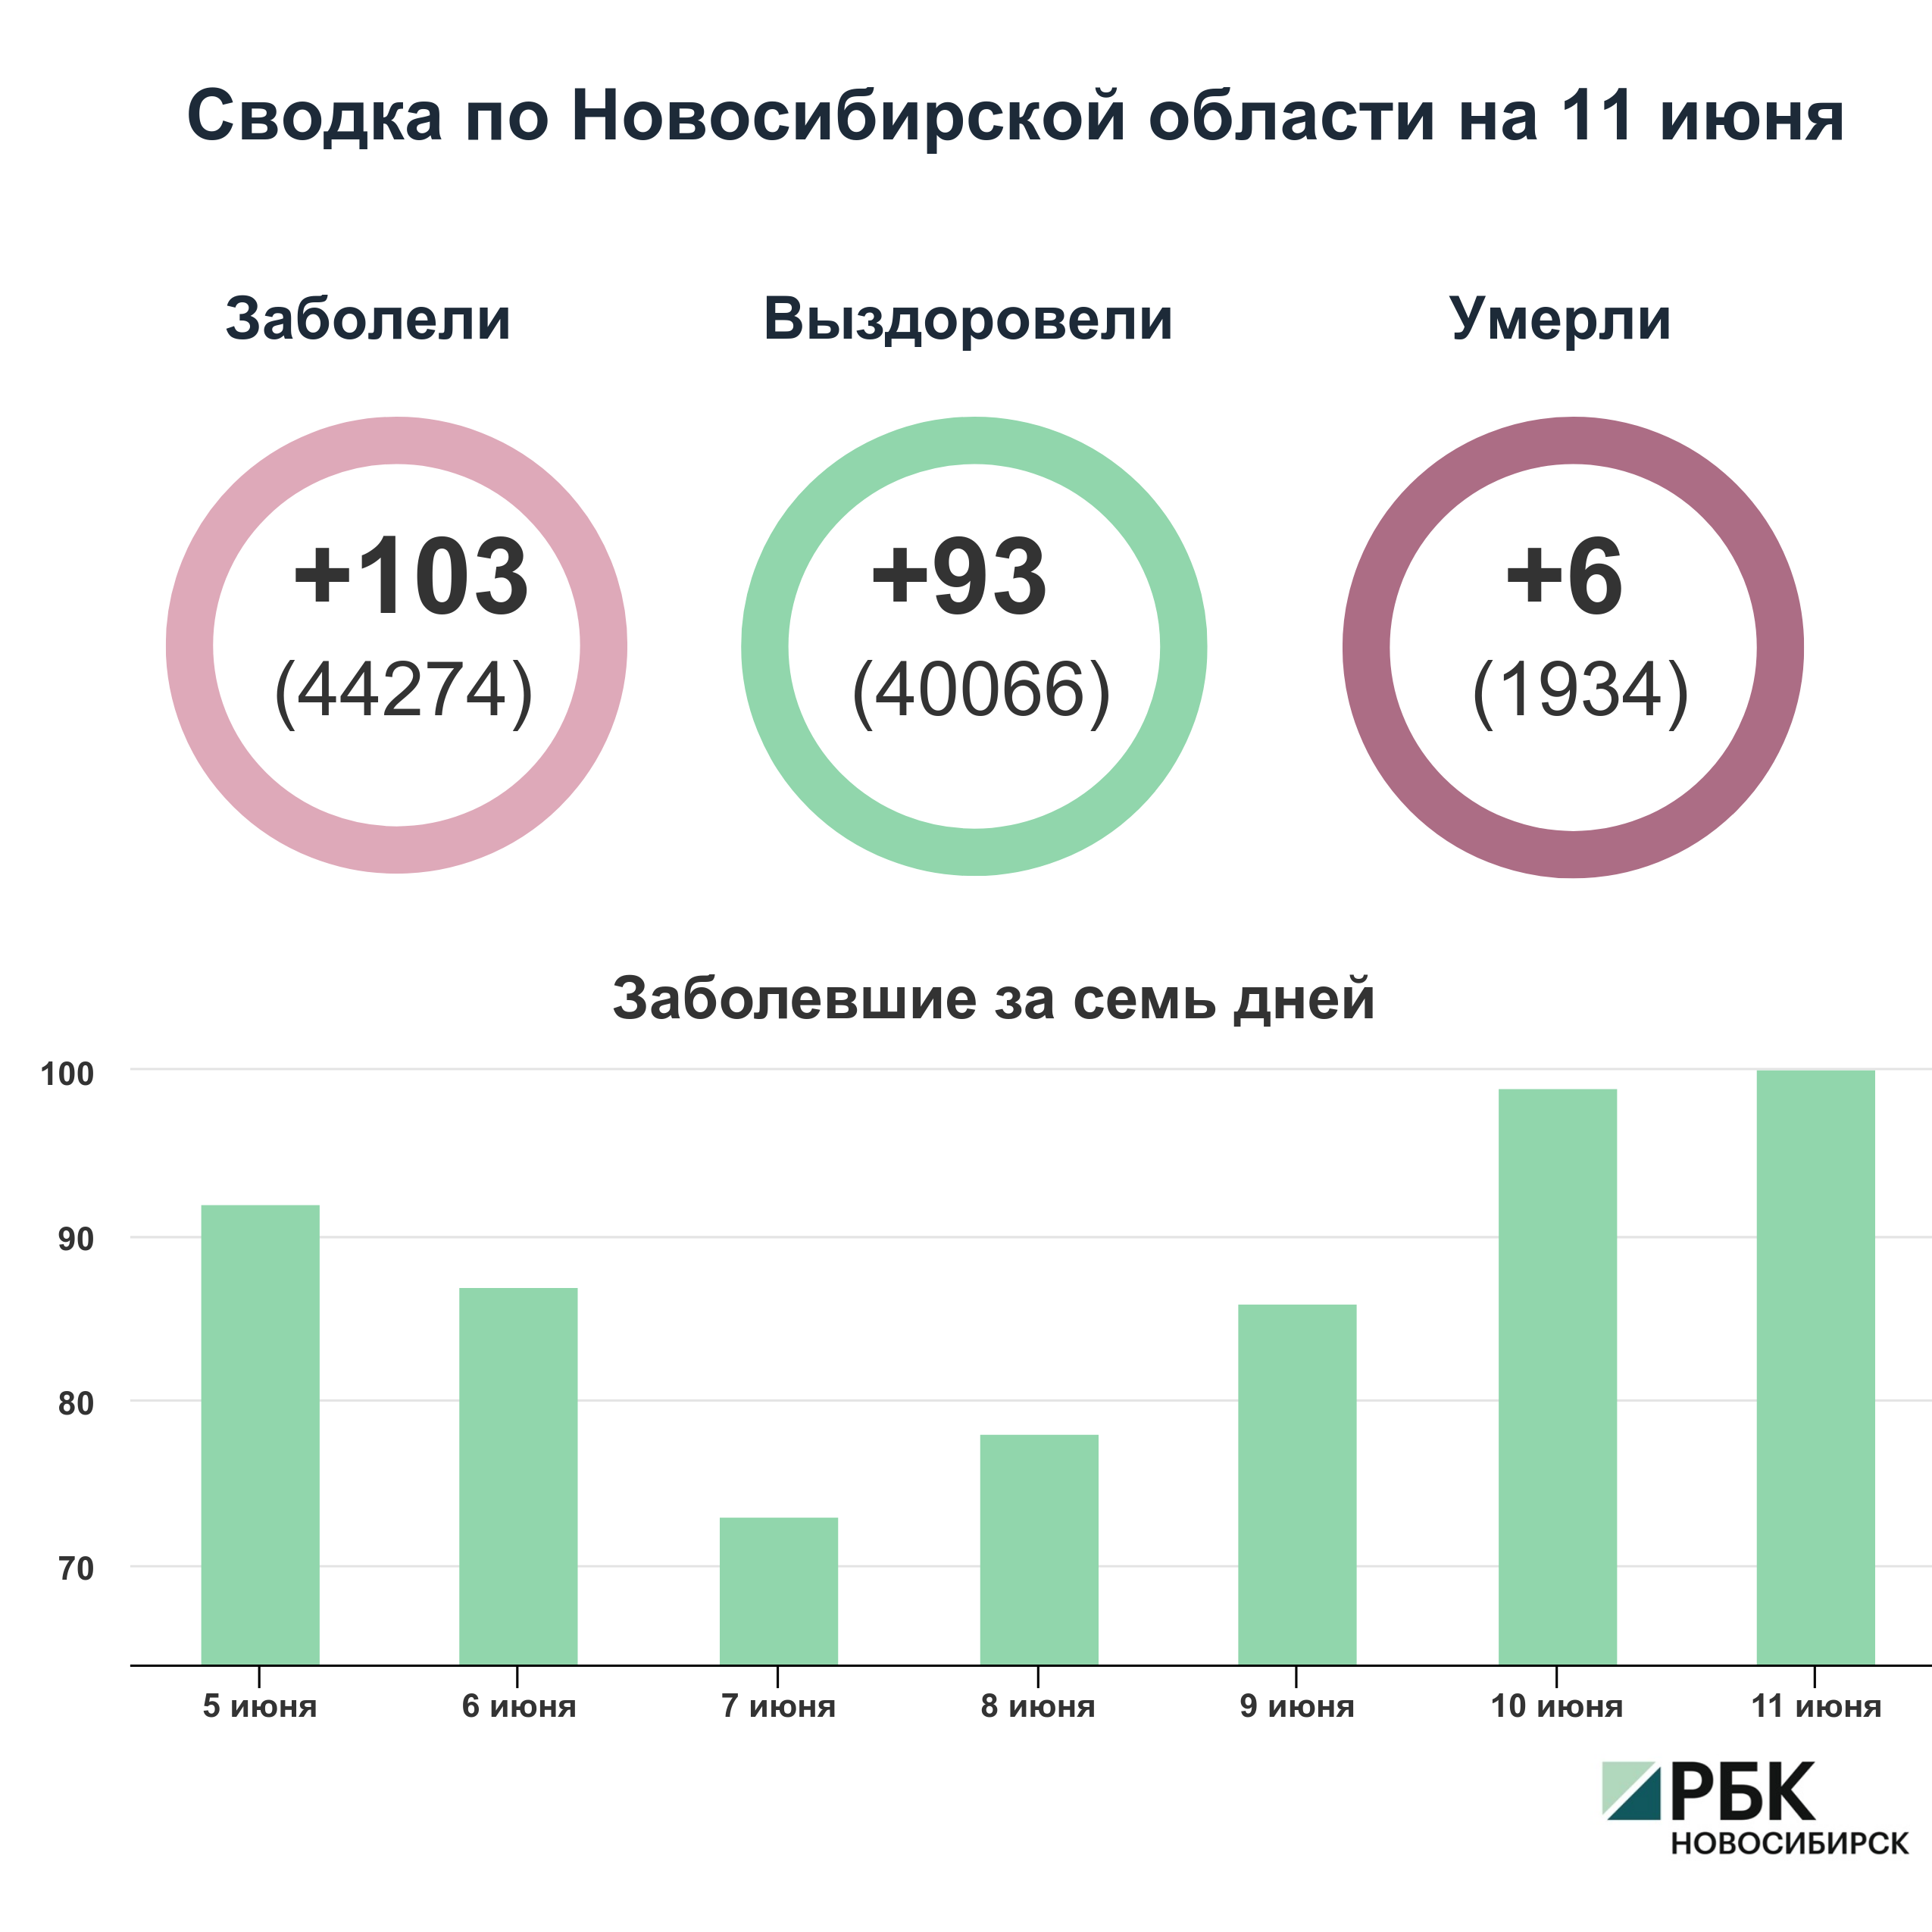 Коронавирус в Новосибирске: сводка на 11 июня